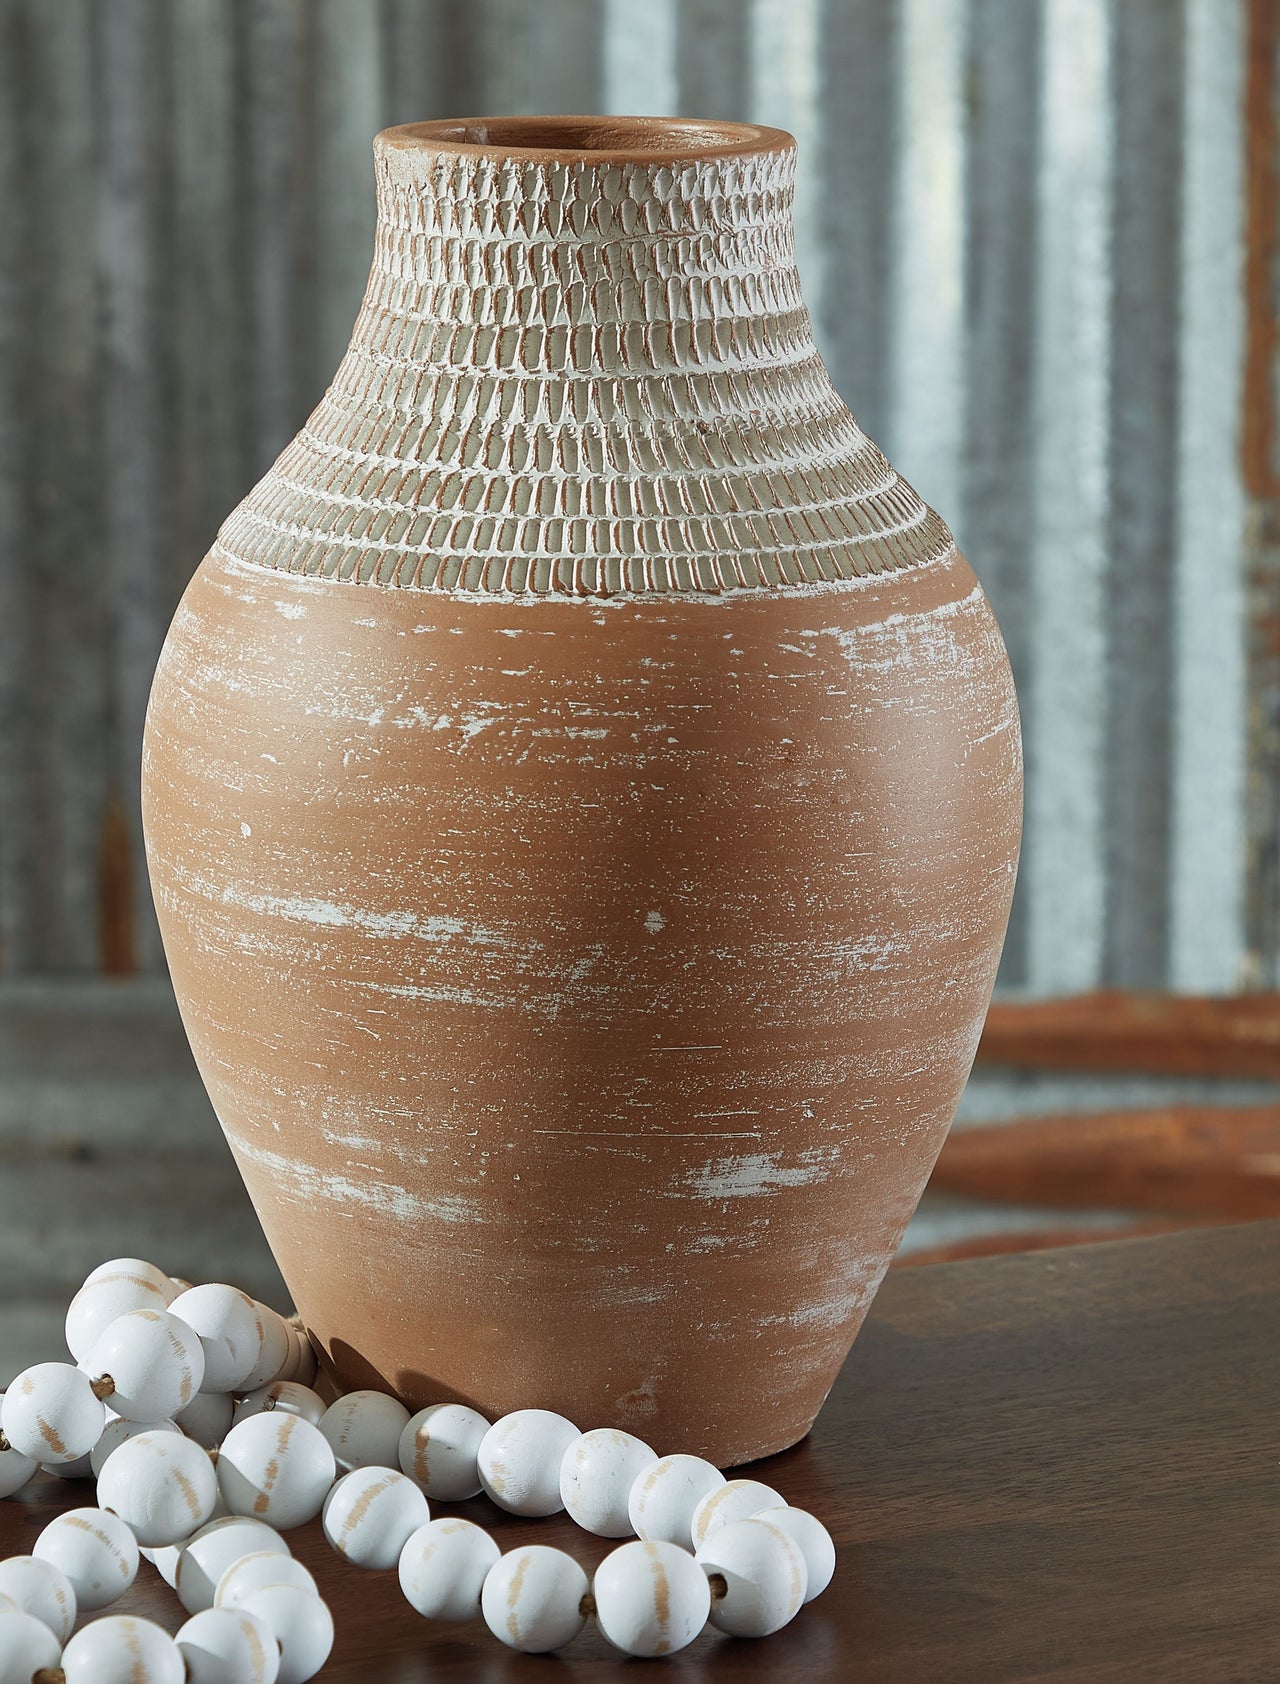 Reclove - Vase - Tony's Home Furnishings